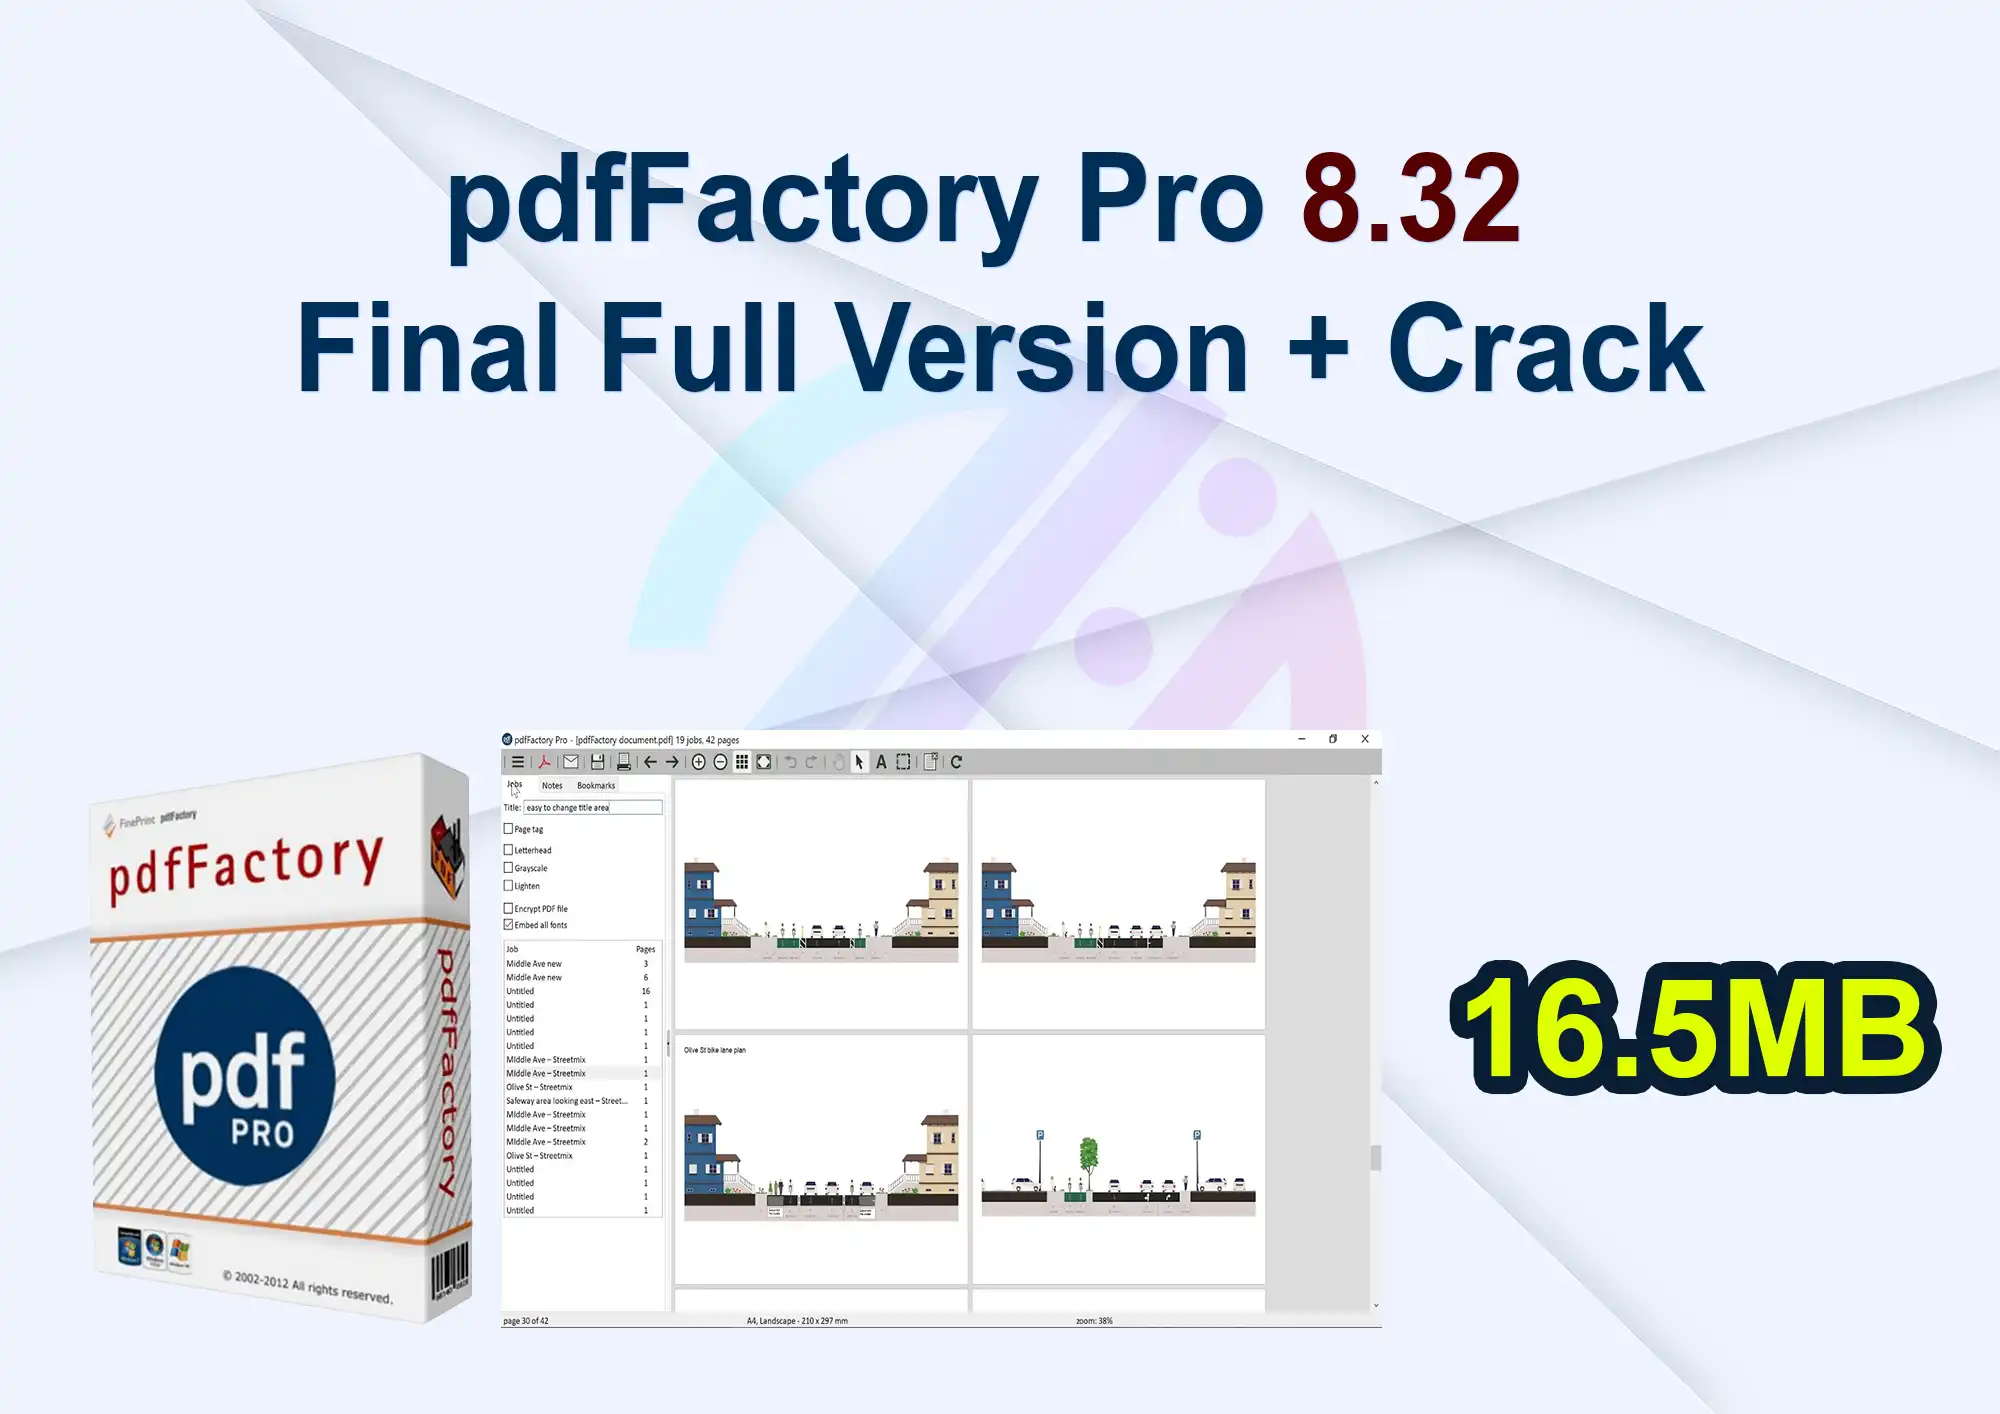 pdfFactory Pro 8.32 Final Full Version + Crack